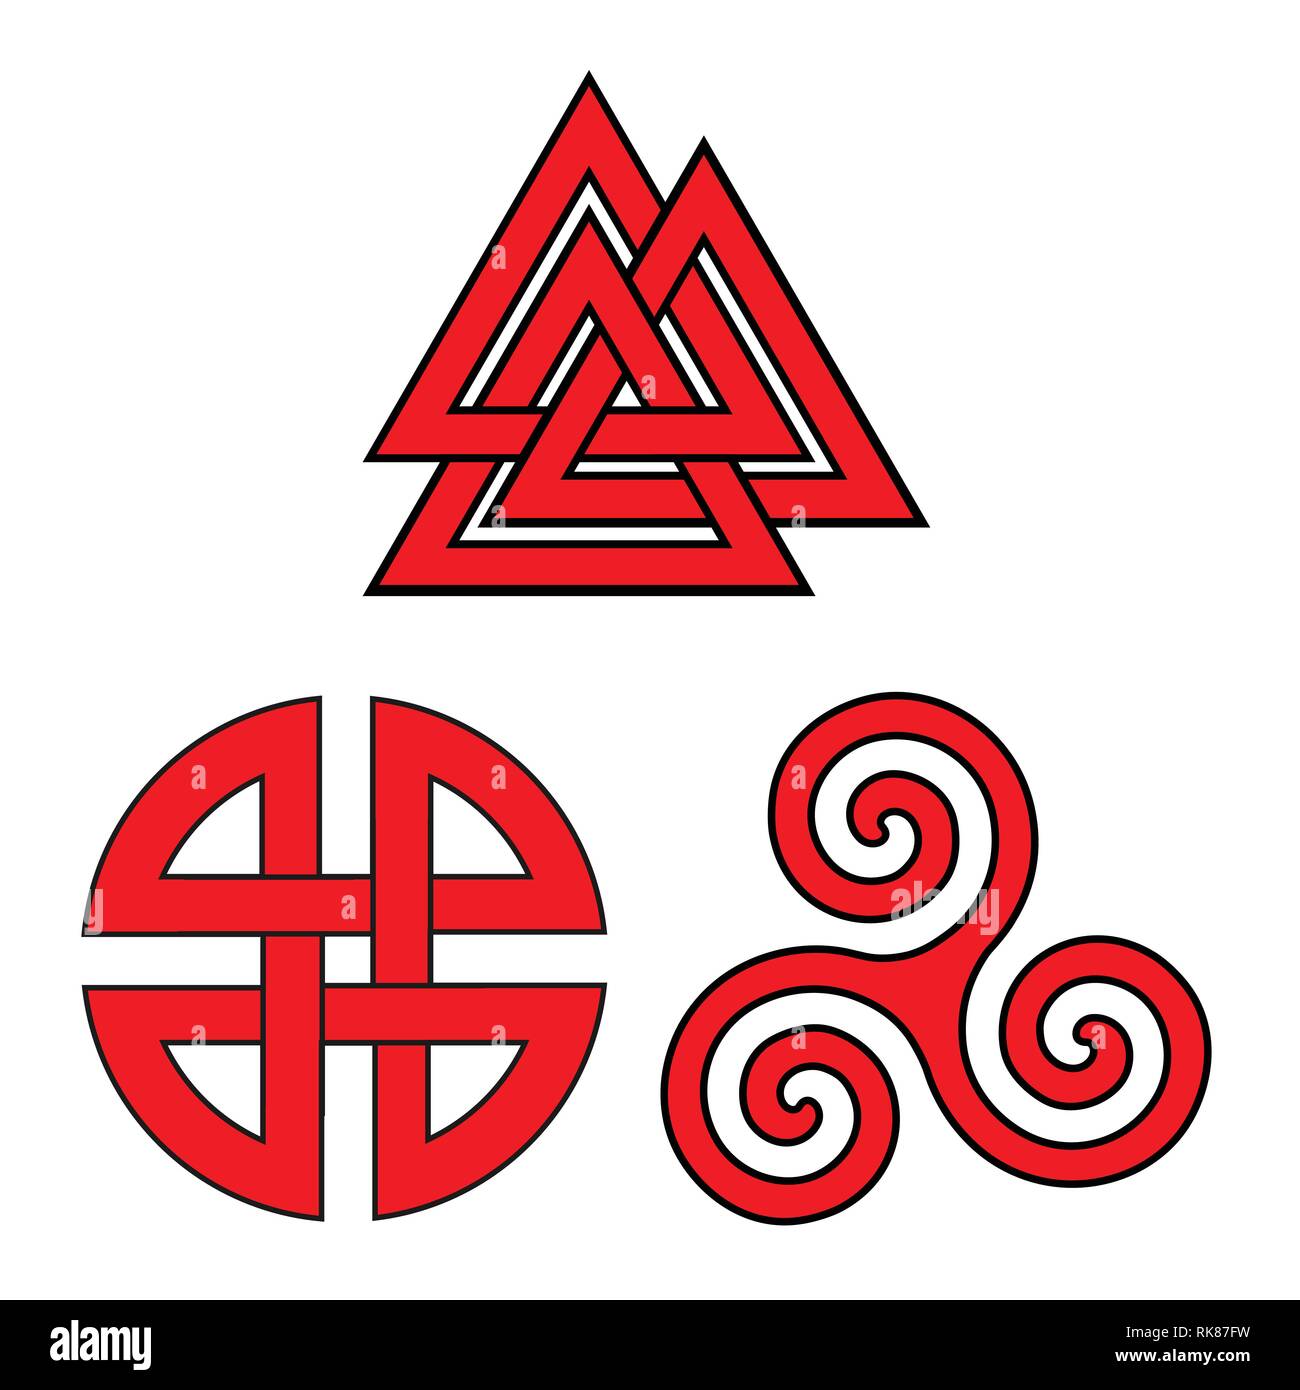 Vector symbol set valknut, shield knot and triskelion Stock Vector